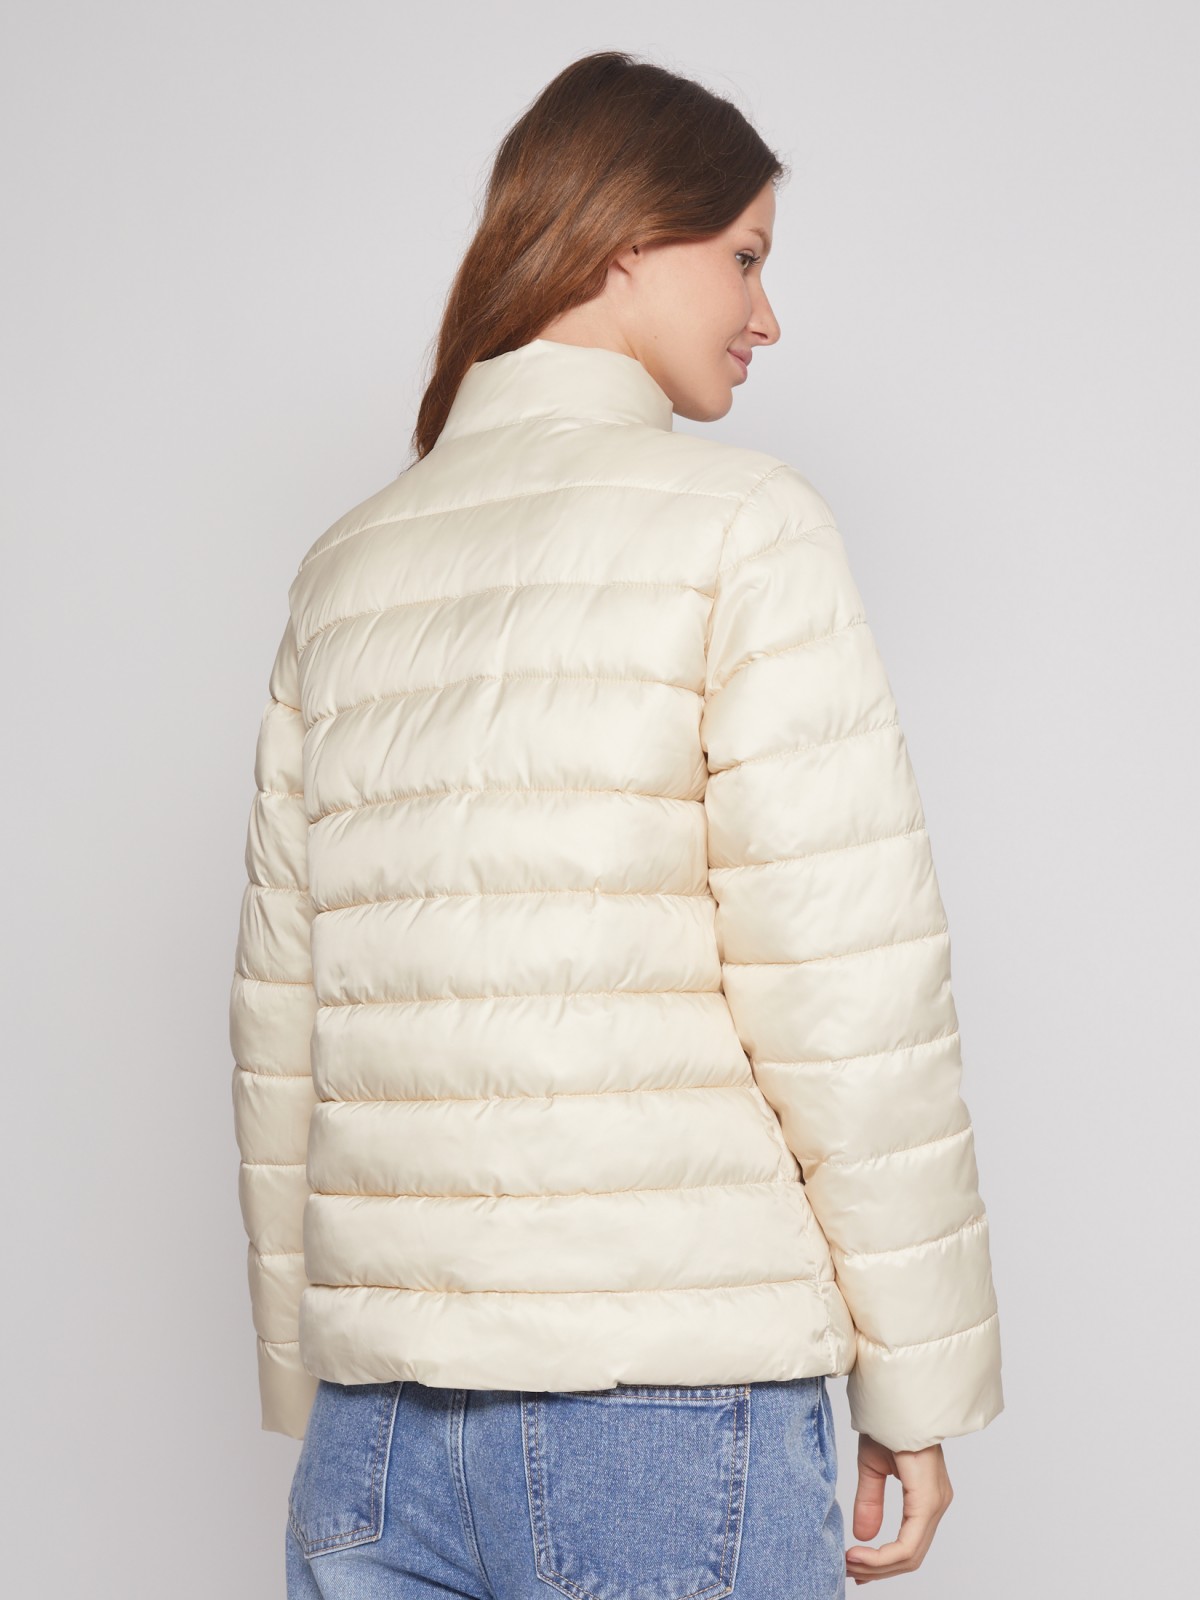 Утеплённая стёганая куртка zolla 022335112034, цвет молоко, размер S - фото 5